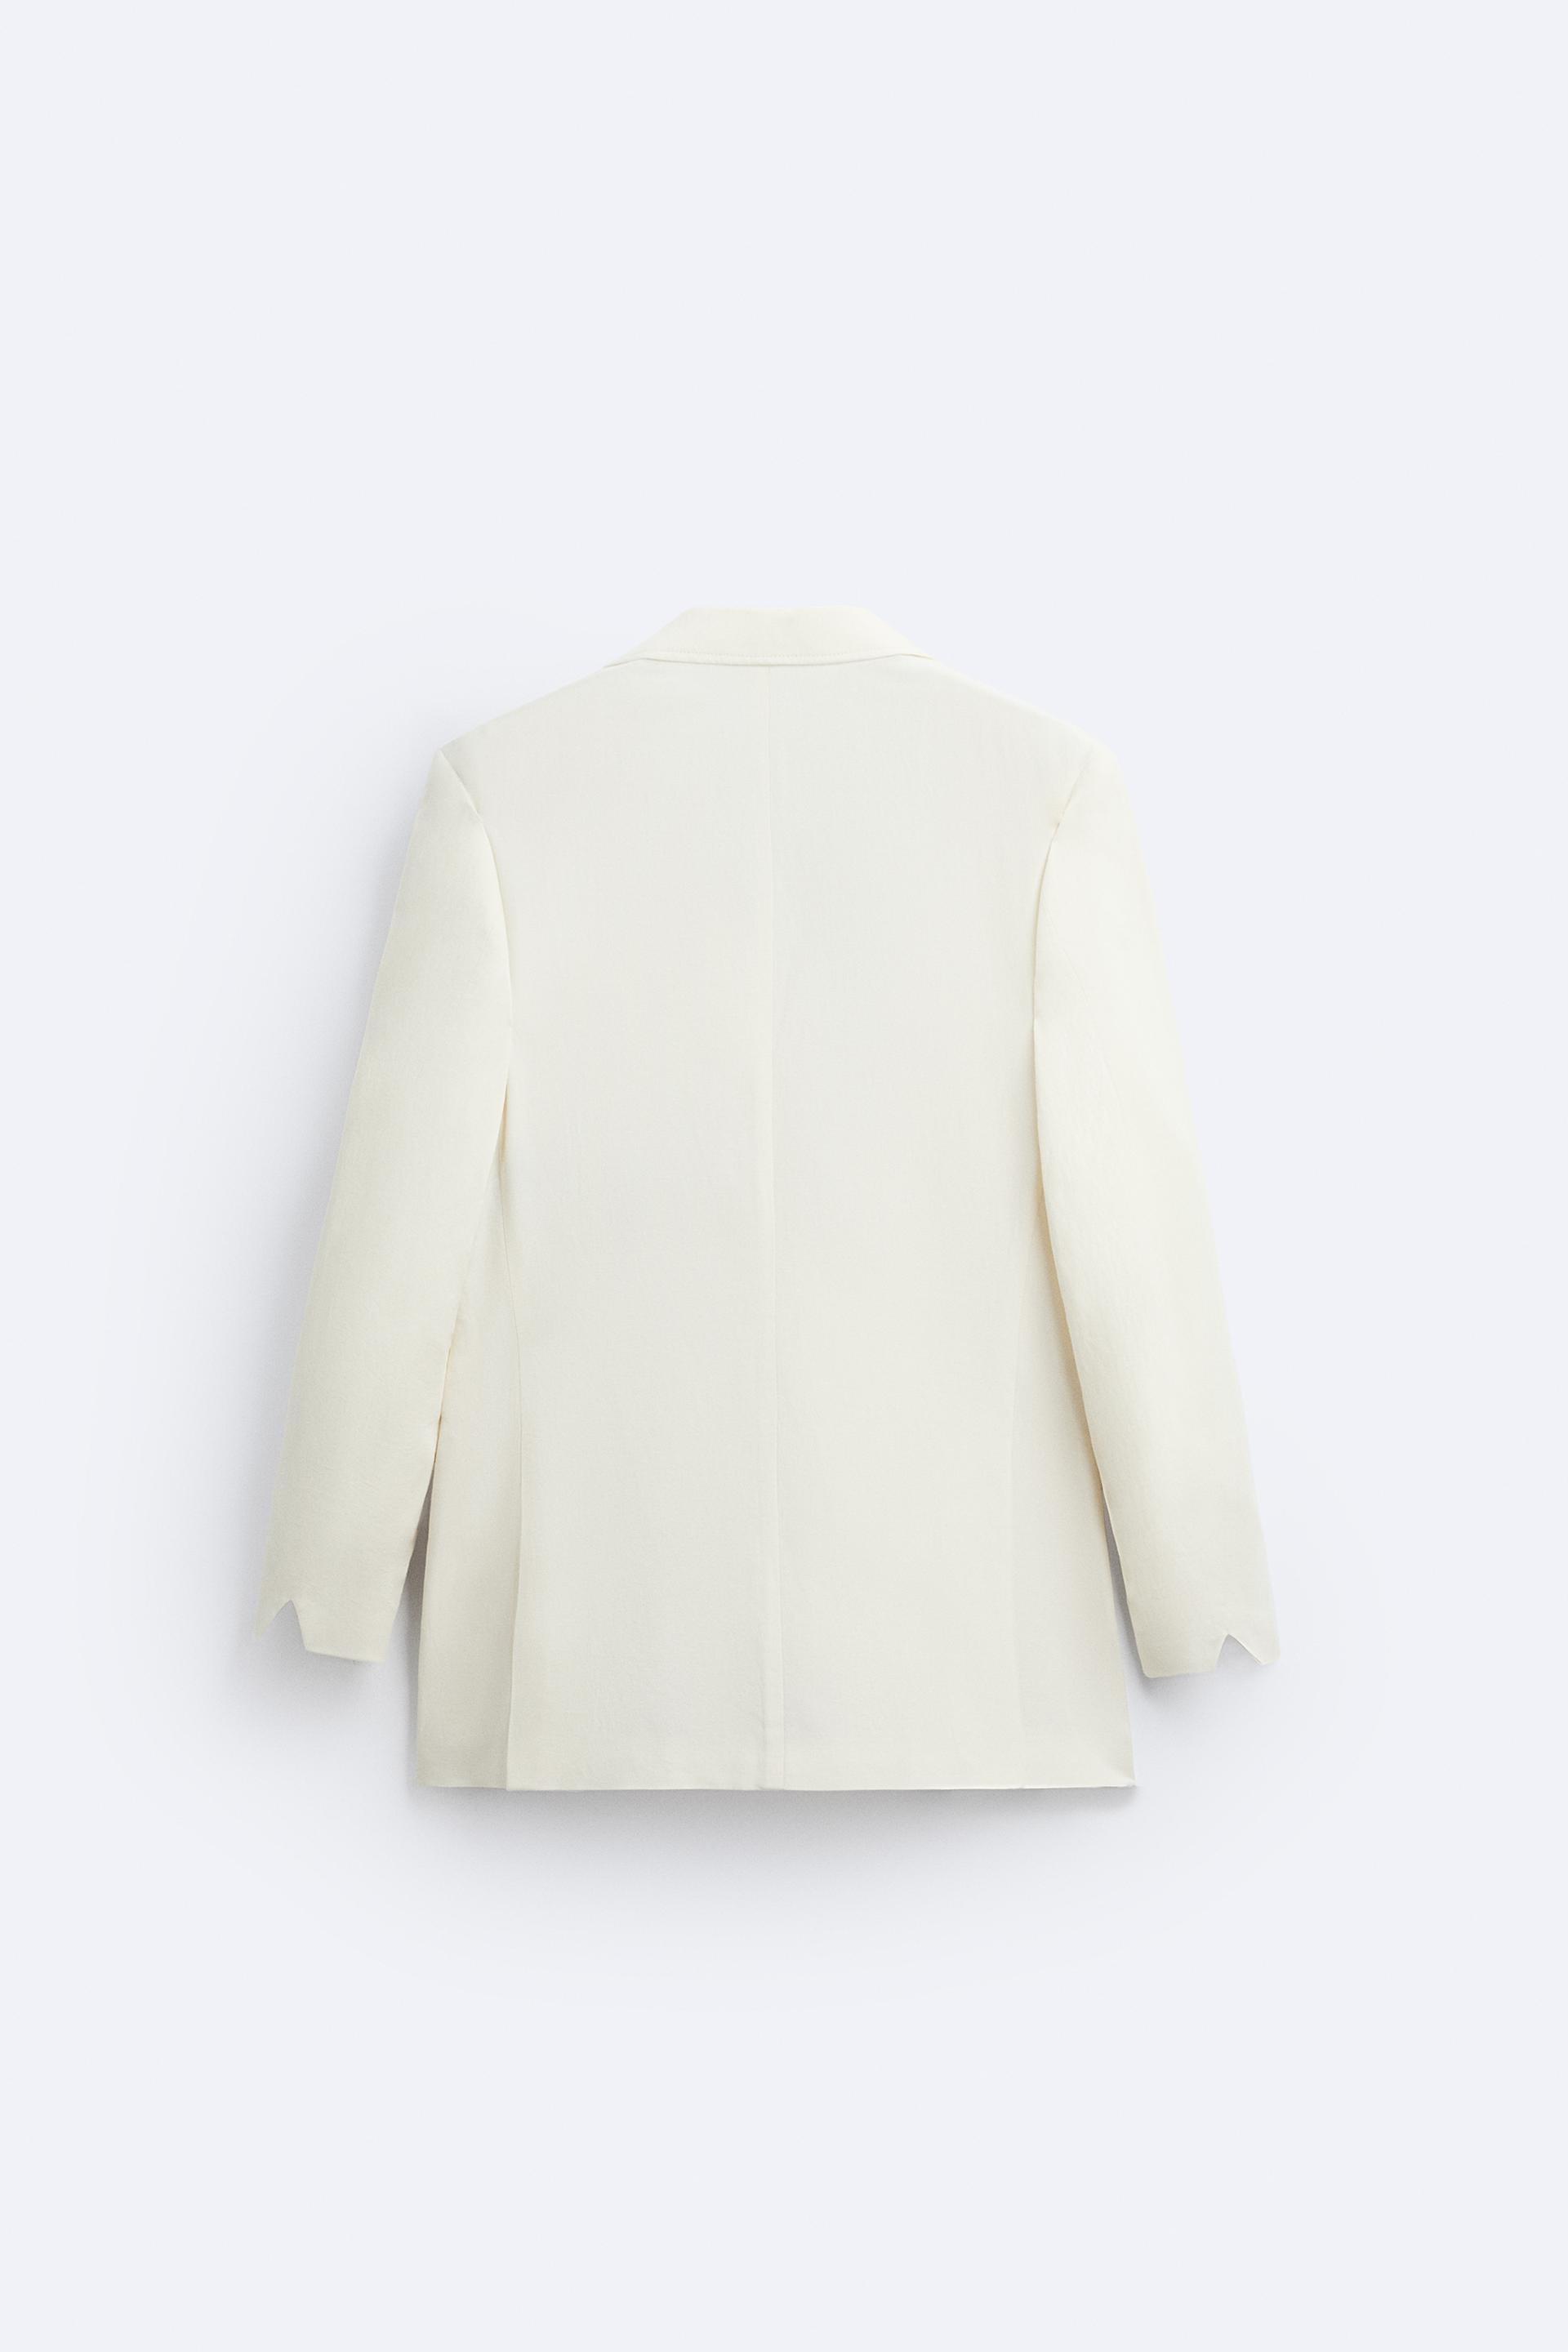 Пиджак Zara Double-breasted, светло-кремовый пиджак zara textured suit светло кремовый